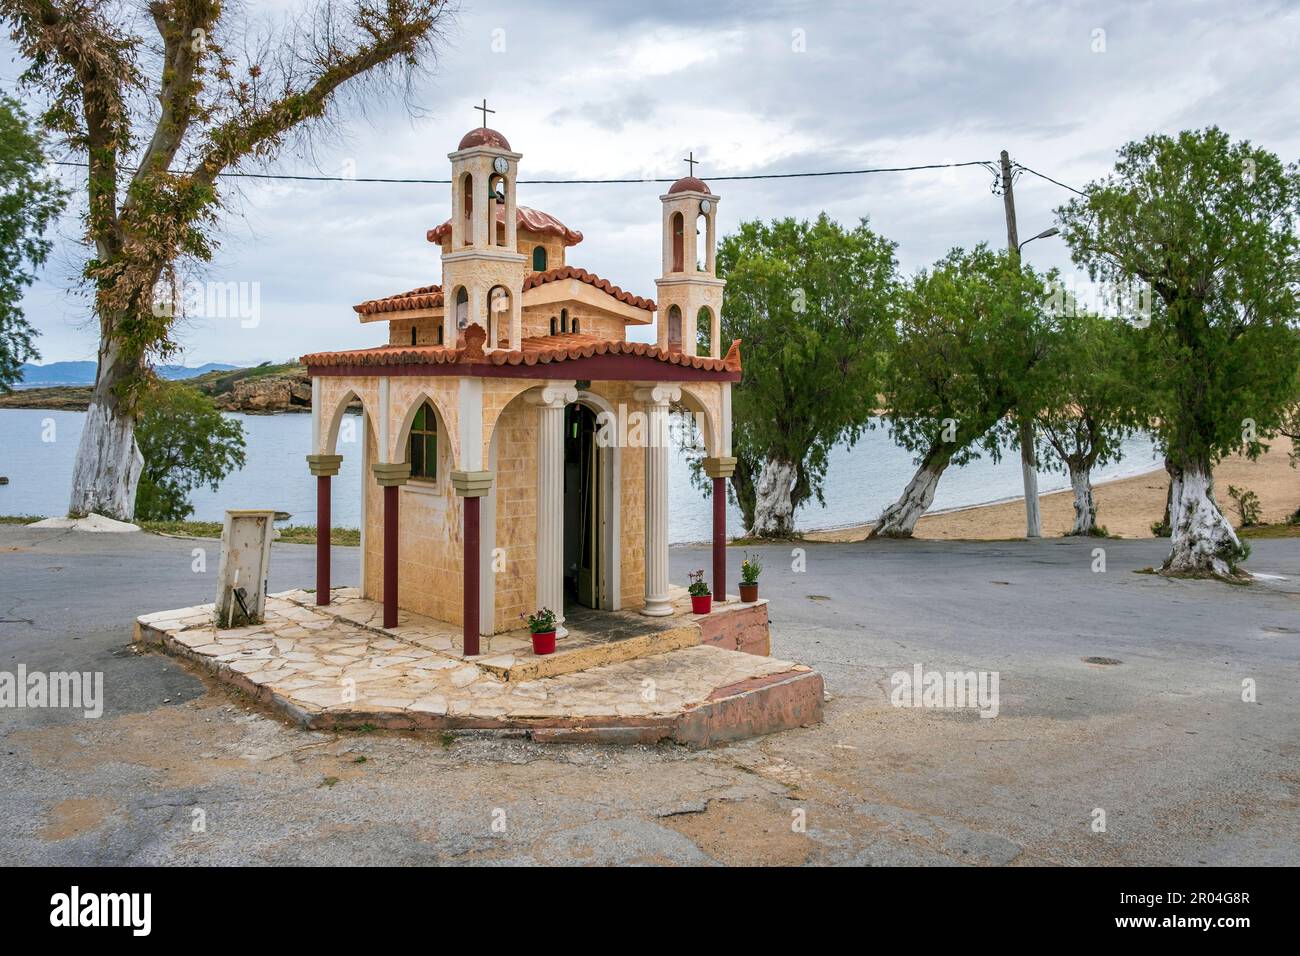 The beautiful small Church close to the beach at Agii Apostoli near Chania, Crete, Greece Stock Photo